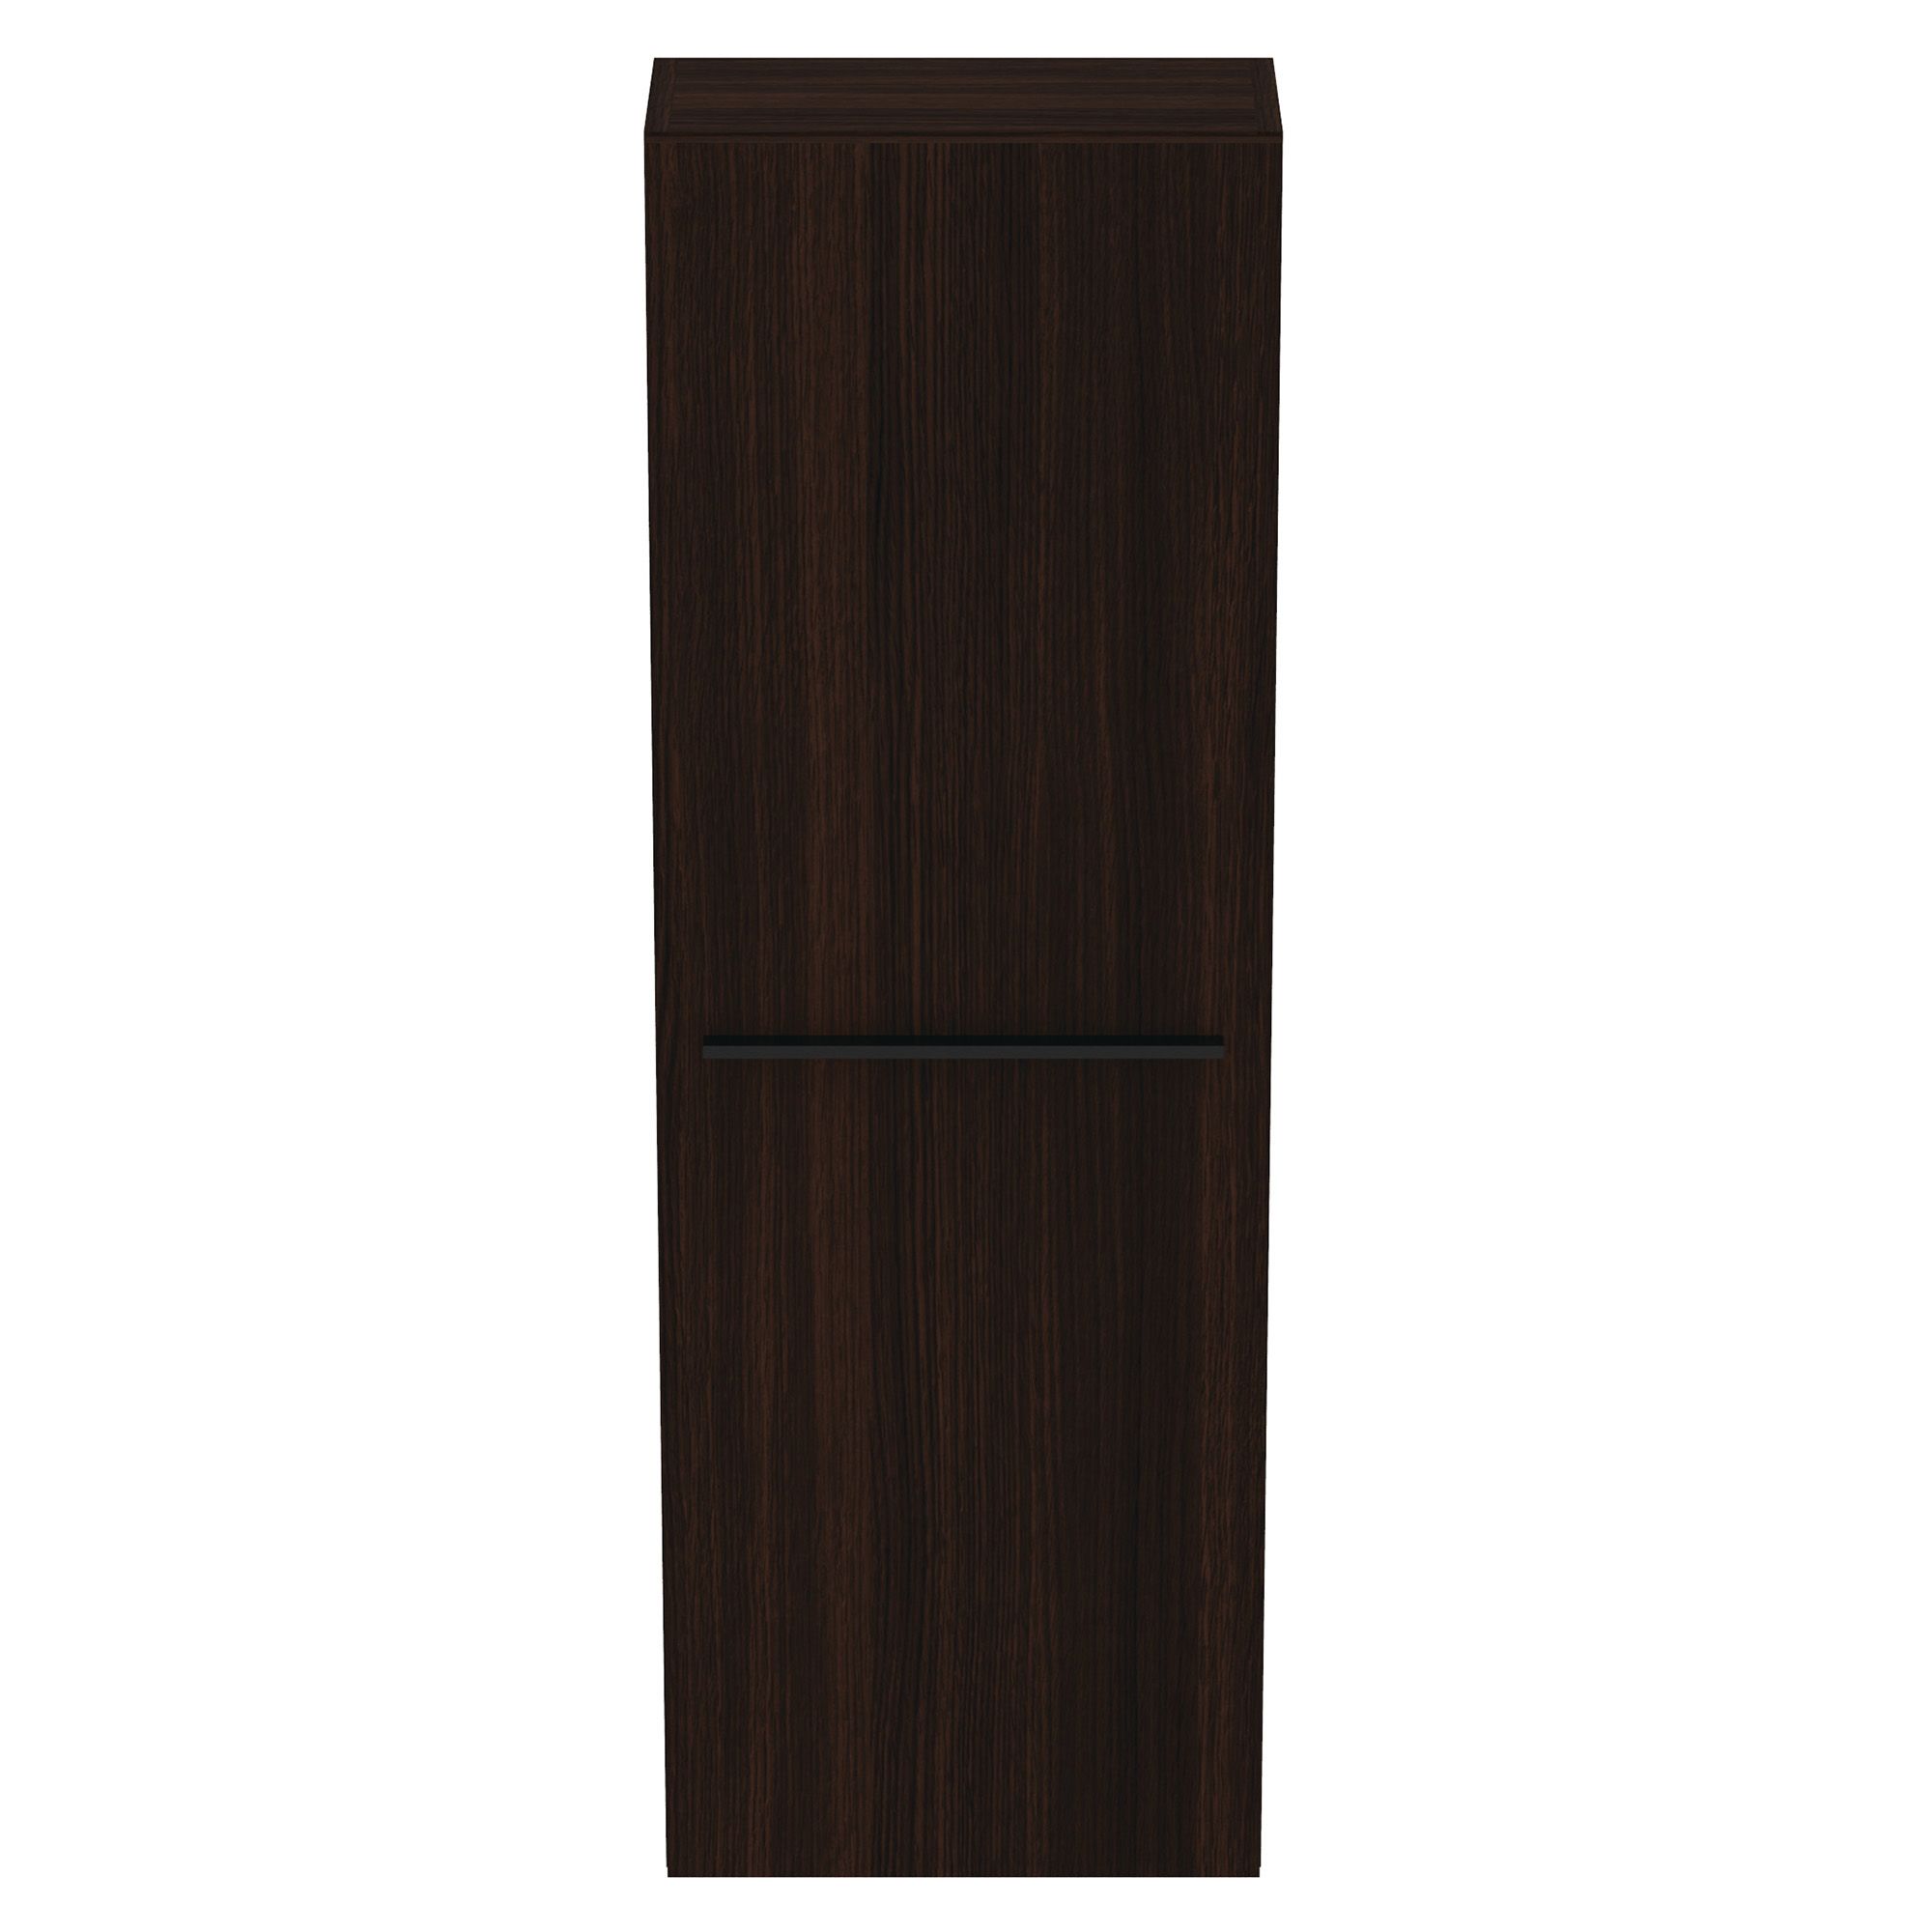 Ideal Standard i.life S Tall Satin Coffee brown Oak effect Single Wall-mounted Bathroom Cabinet (H)120cm (W)40cm